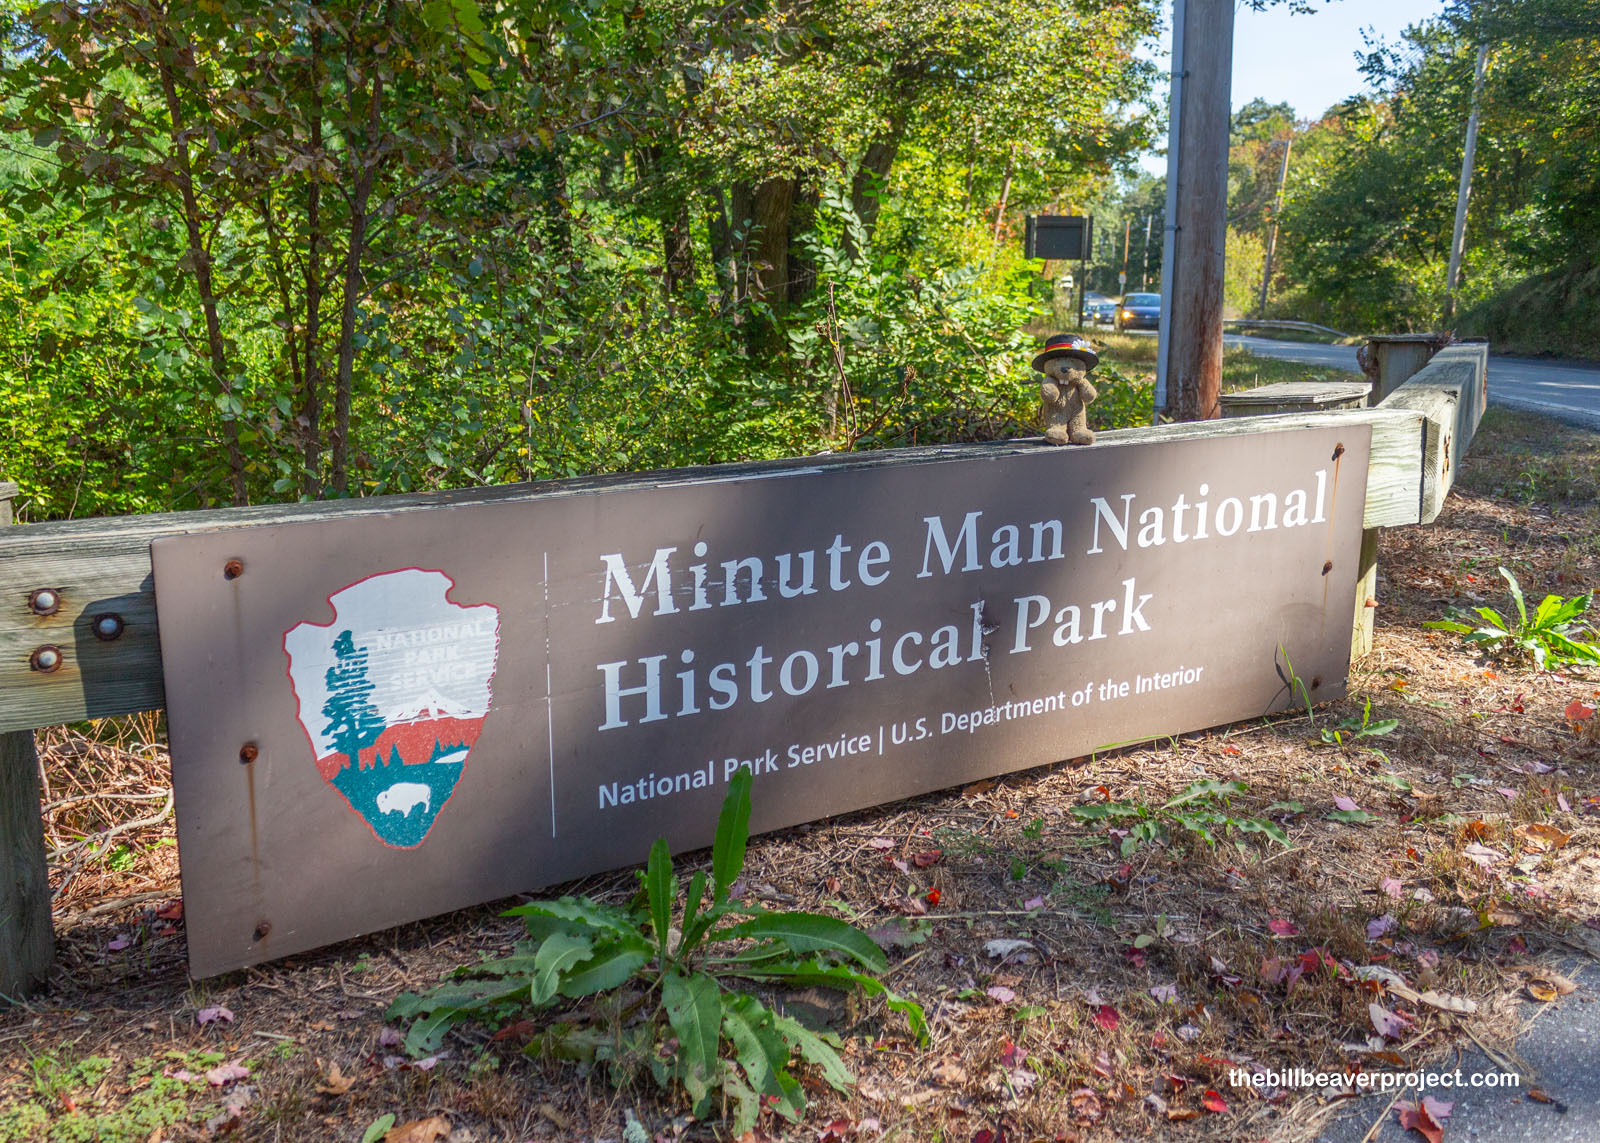 Minute Man National Historical Park